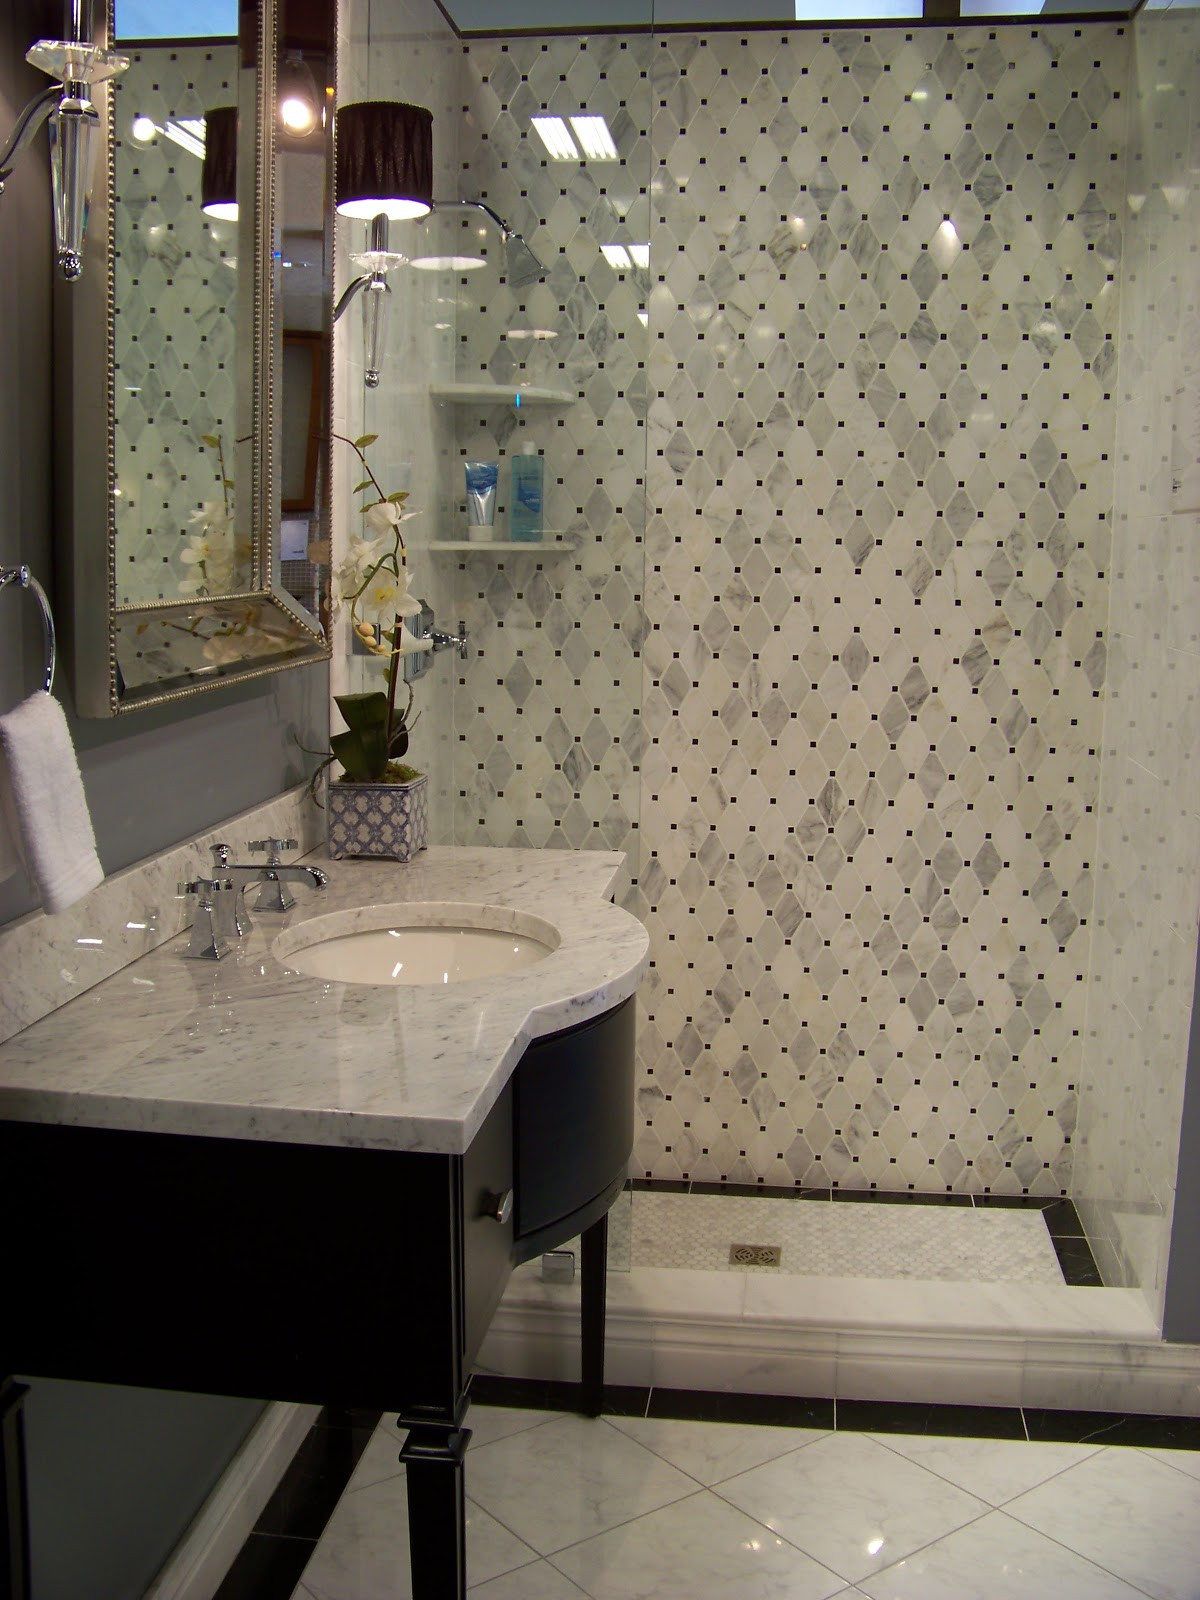 Ceramic Bathroom Tile
 Home Decor Bud ista Bathroom Inspiration The Tile Shop